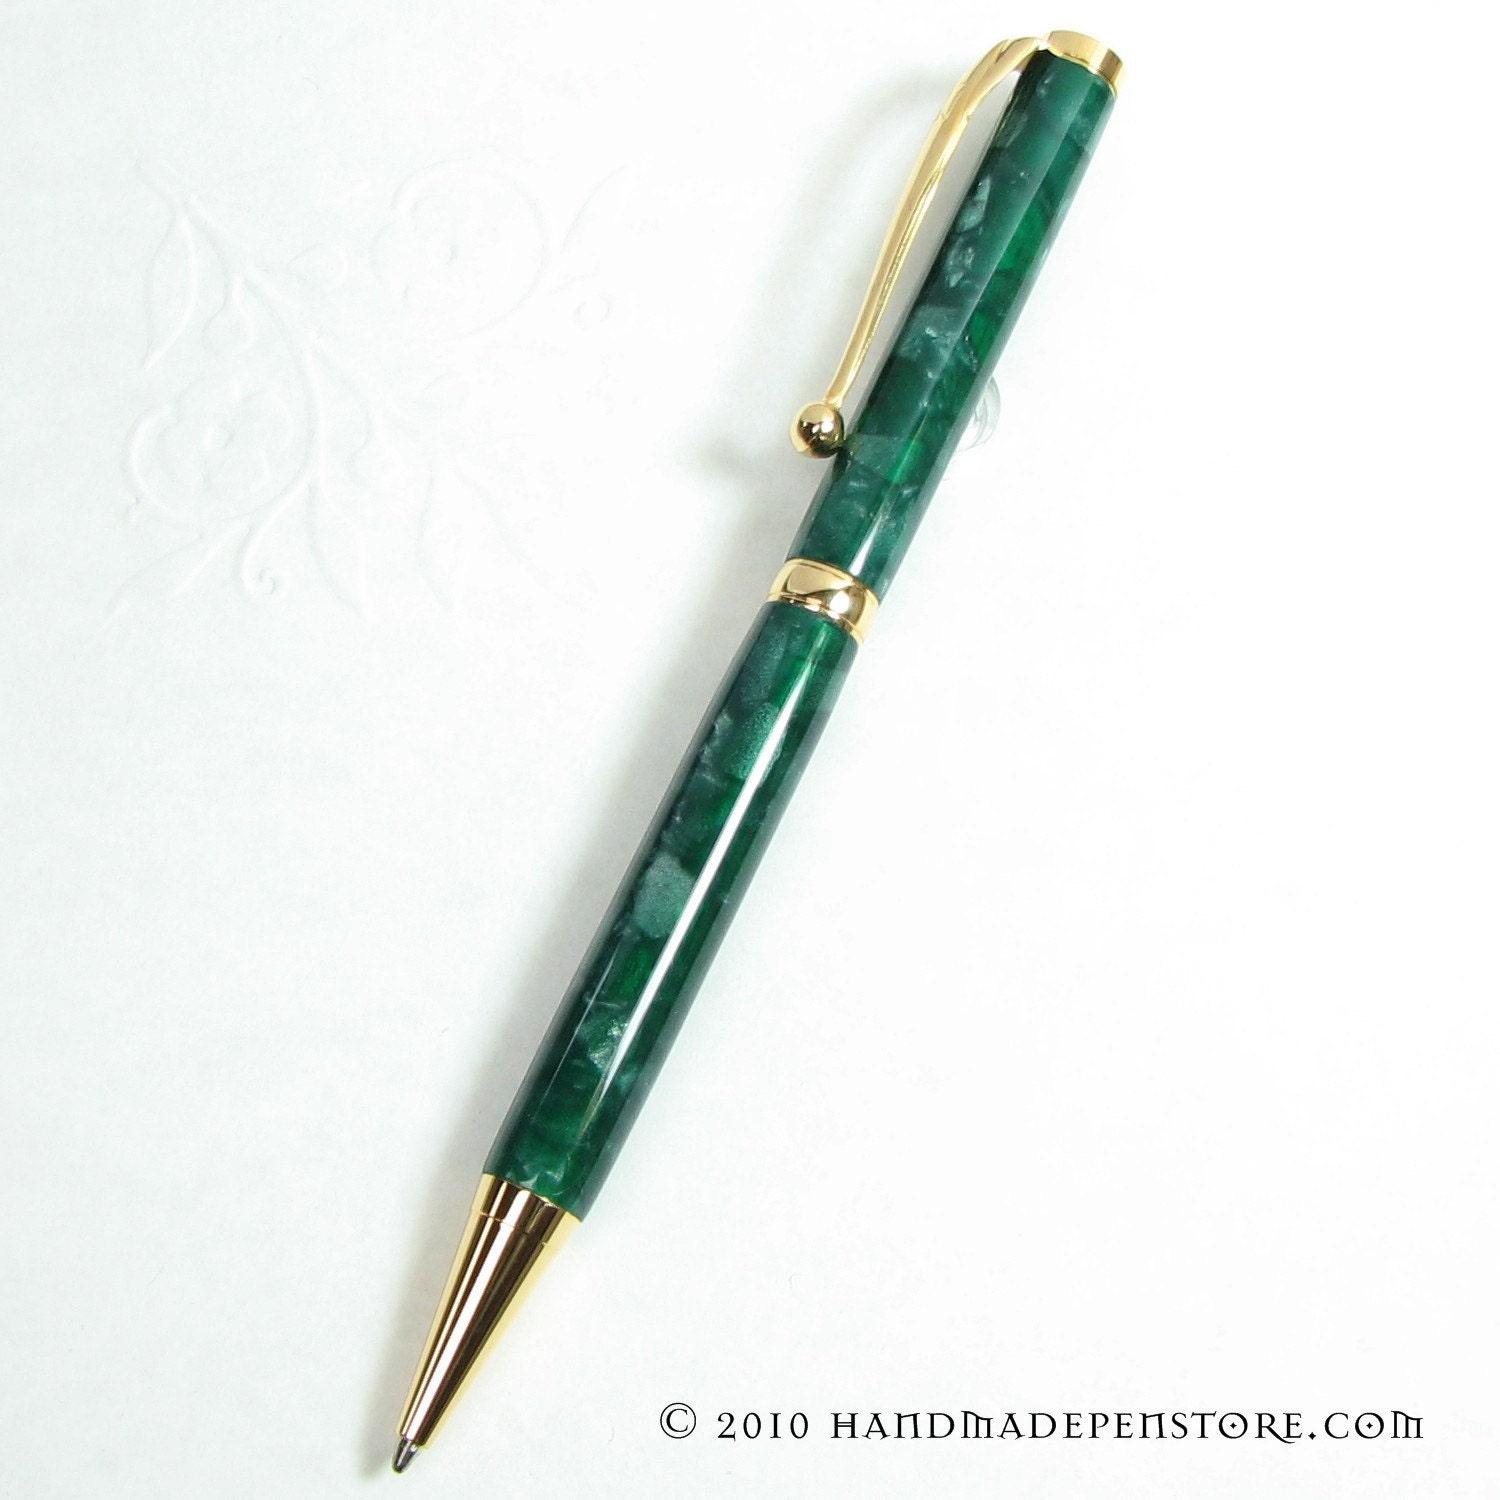 GREEN FLAKE Acrylic pen with GOLD Titanium Nitride - Handmade Cross Style Ball-Point Pen - handmadepenstore